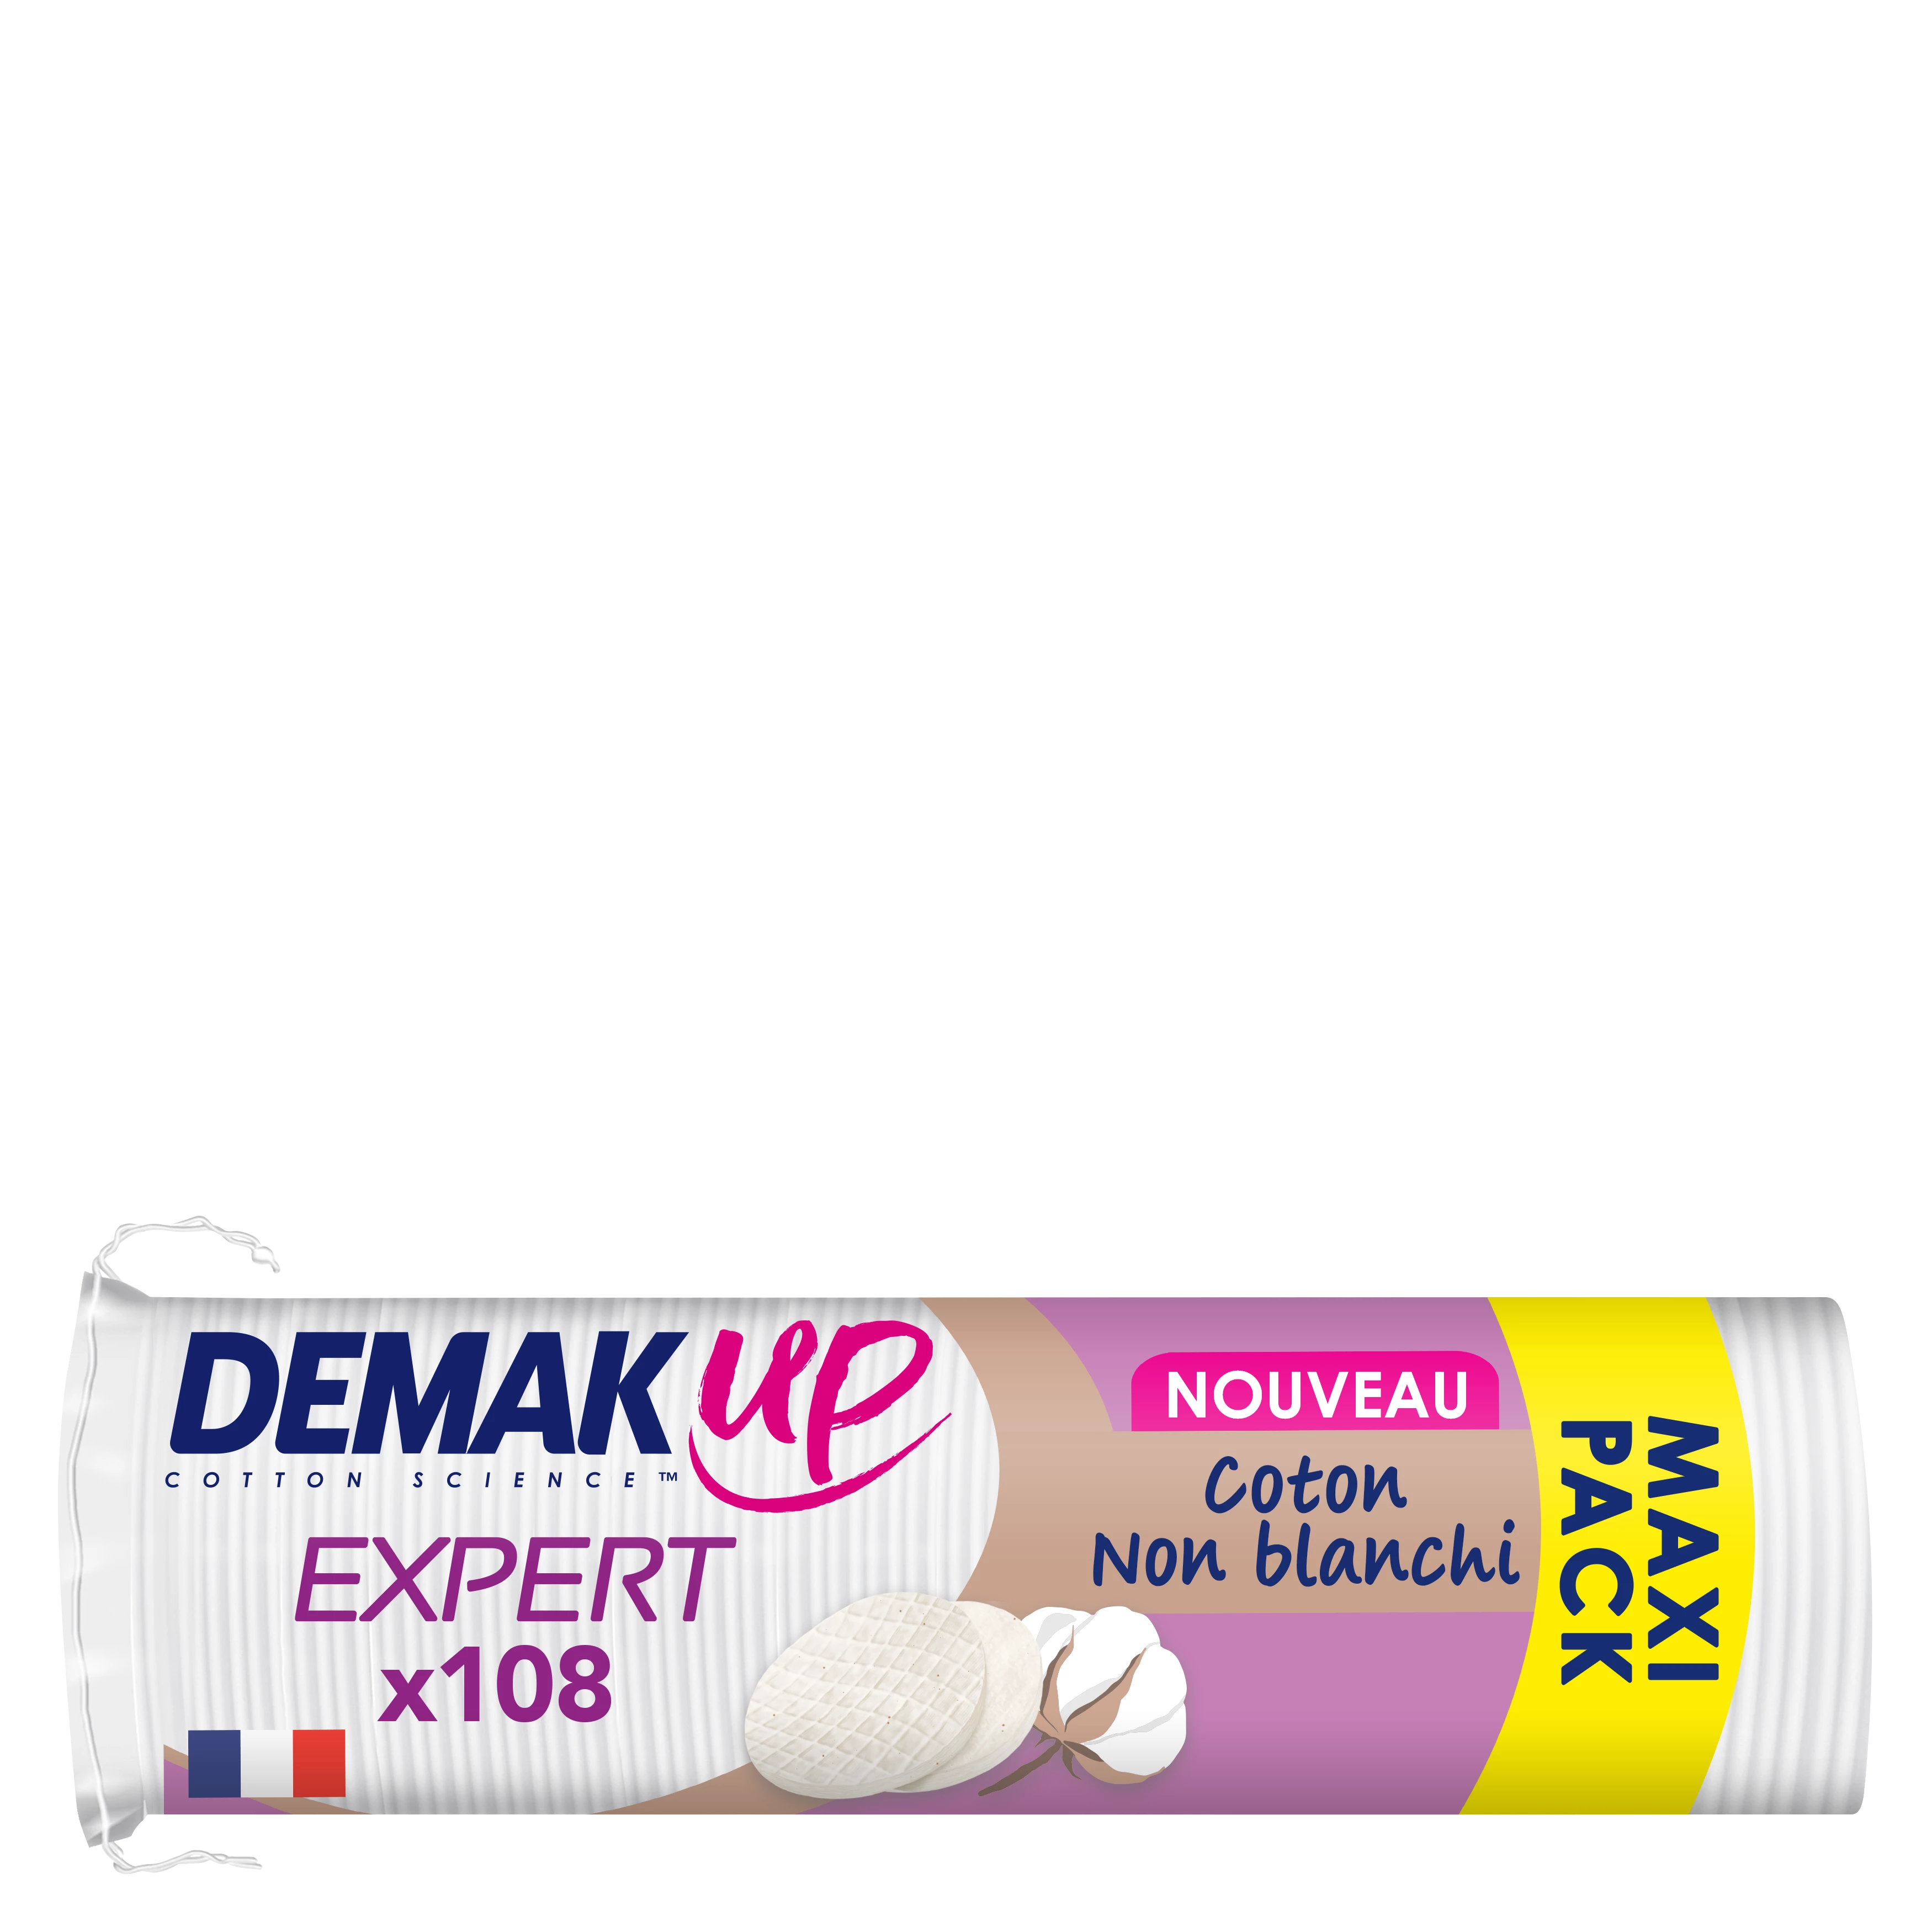 Demakup 专家卸妆垫 X108